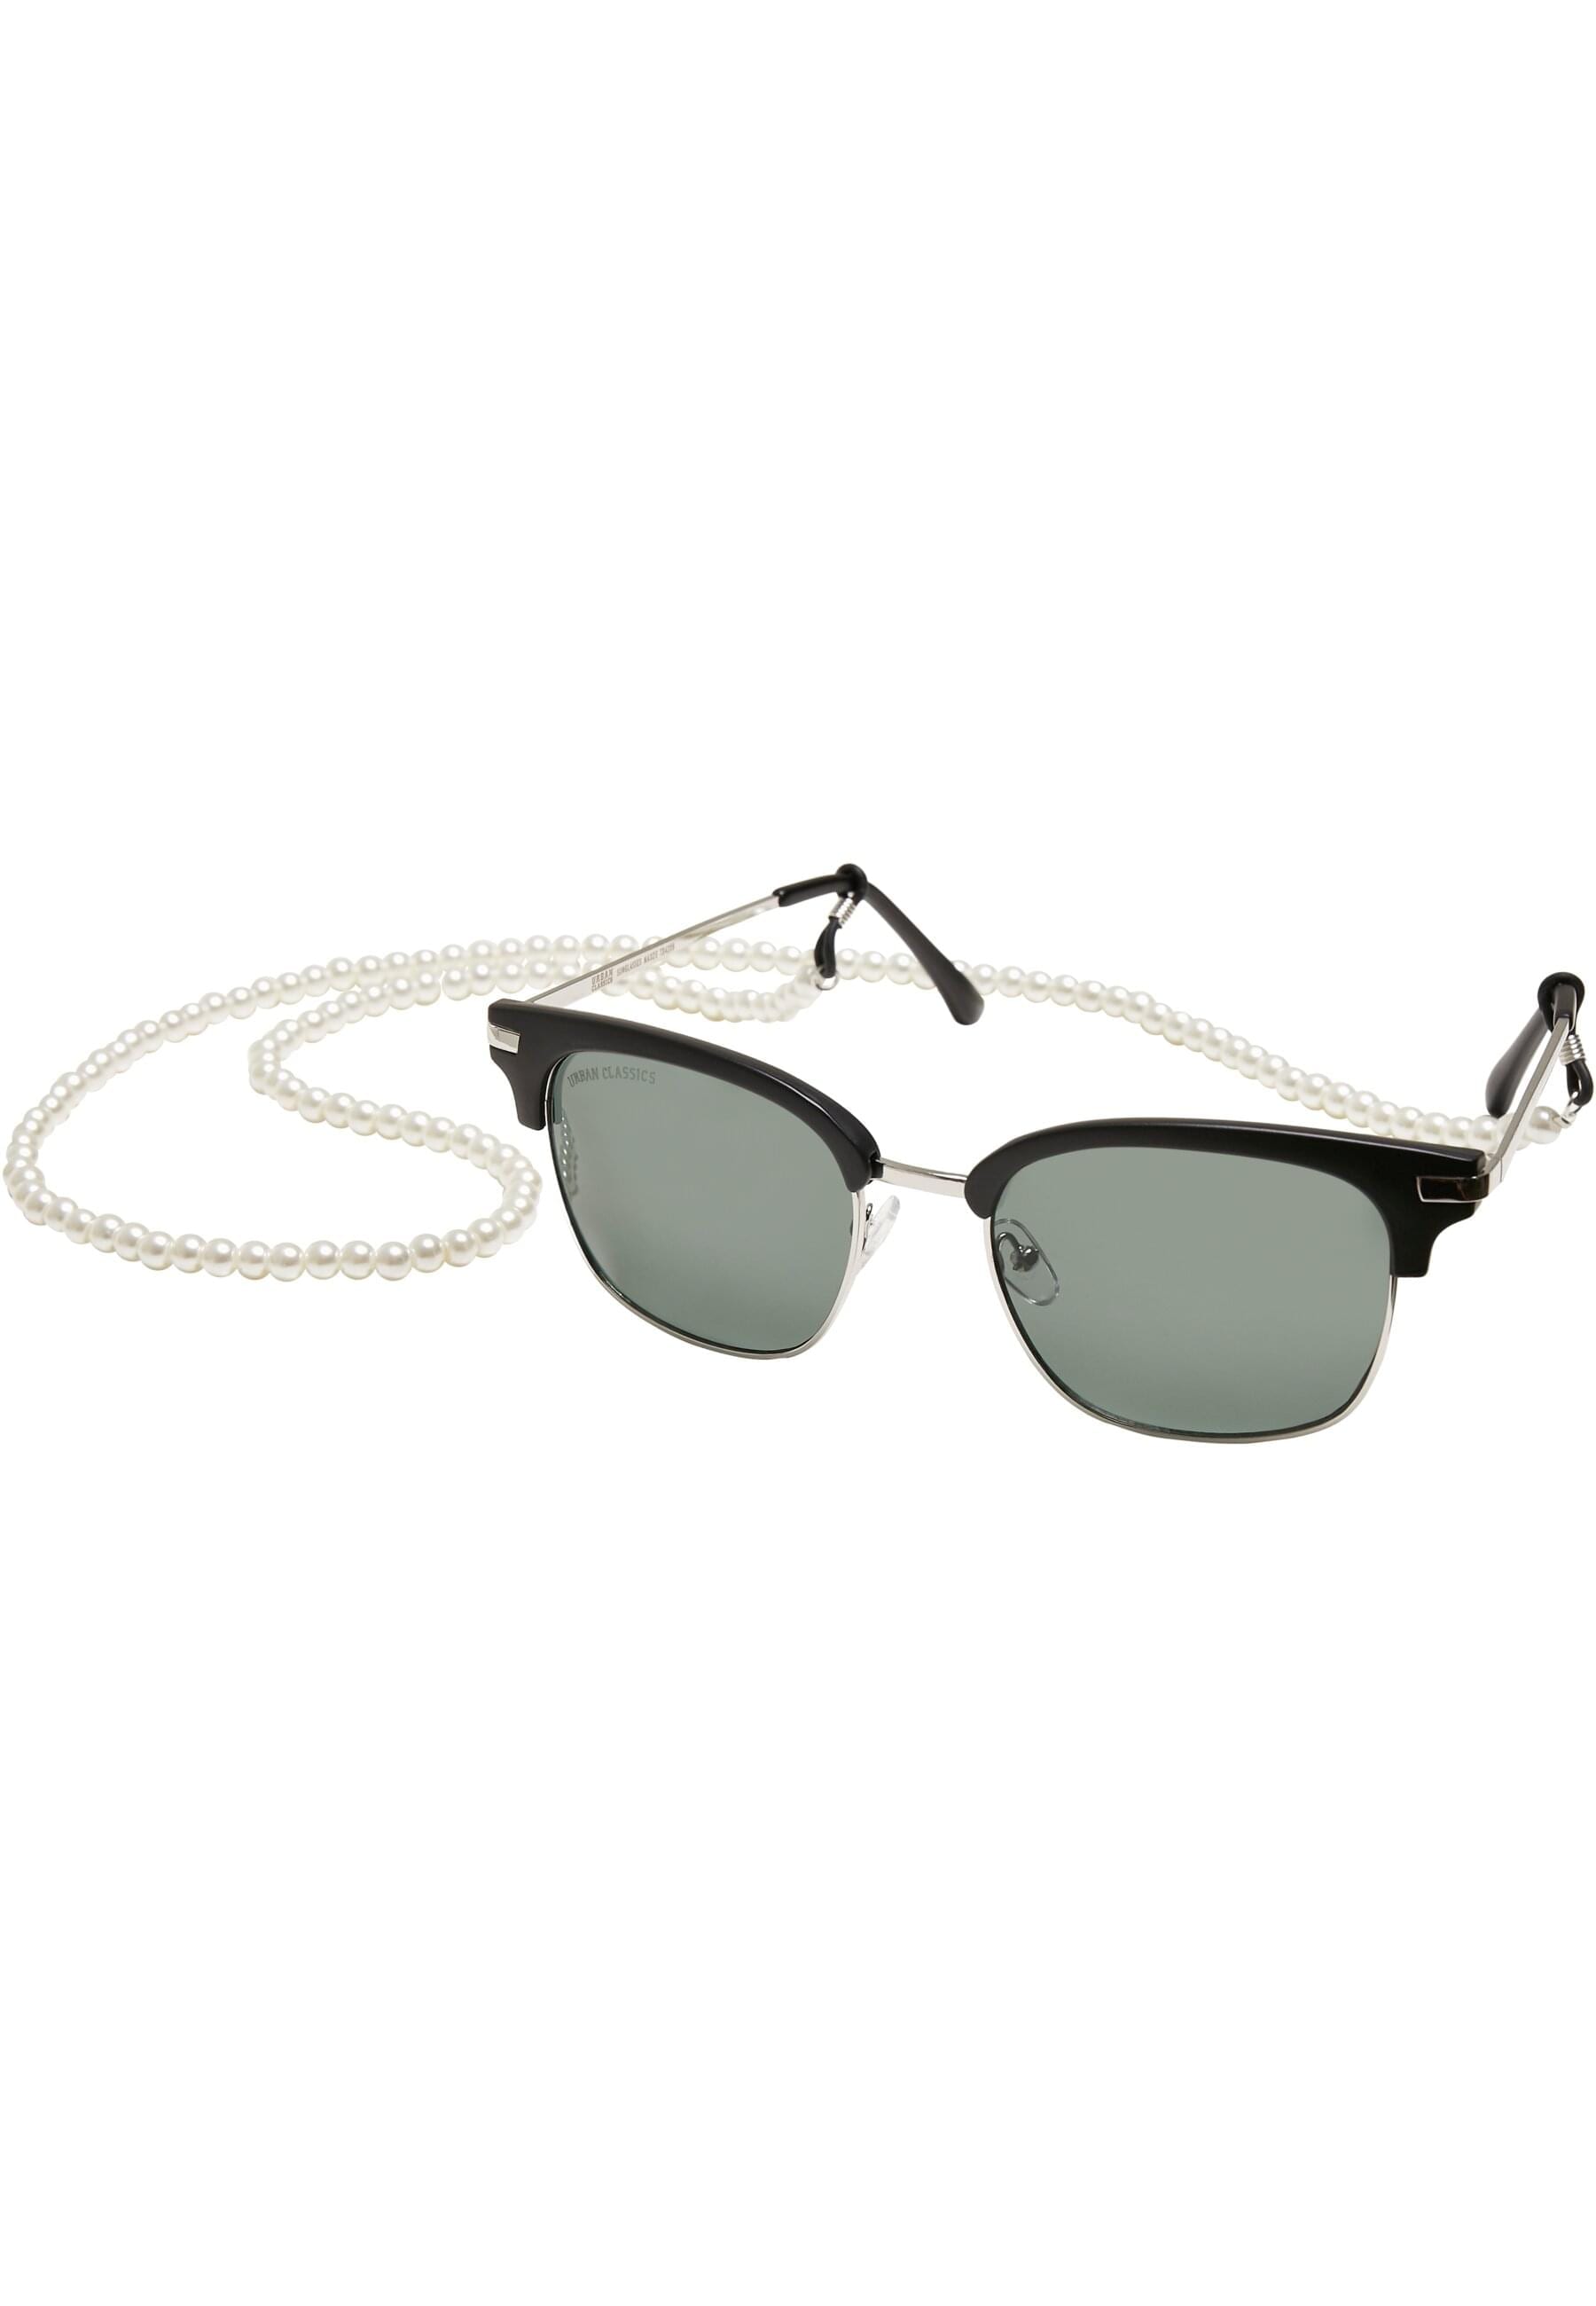 URBAN CLASSICS Sonnenbrille »Unisex walking kaufen | online Sunglasses Chain« Crete With I\'m